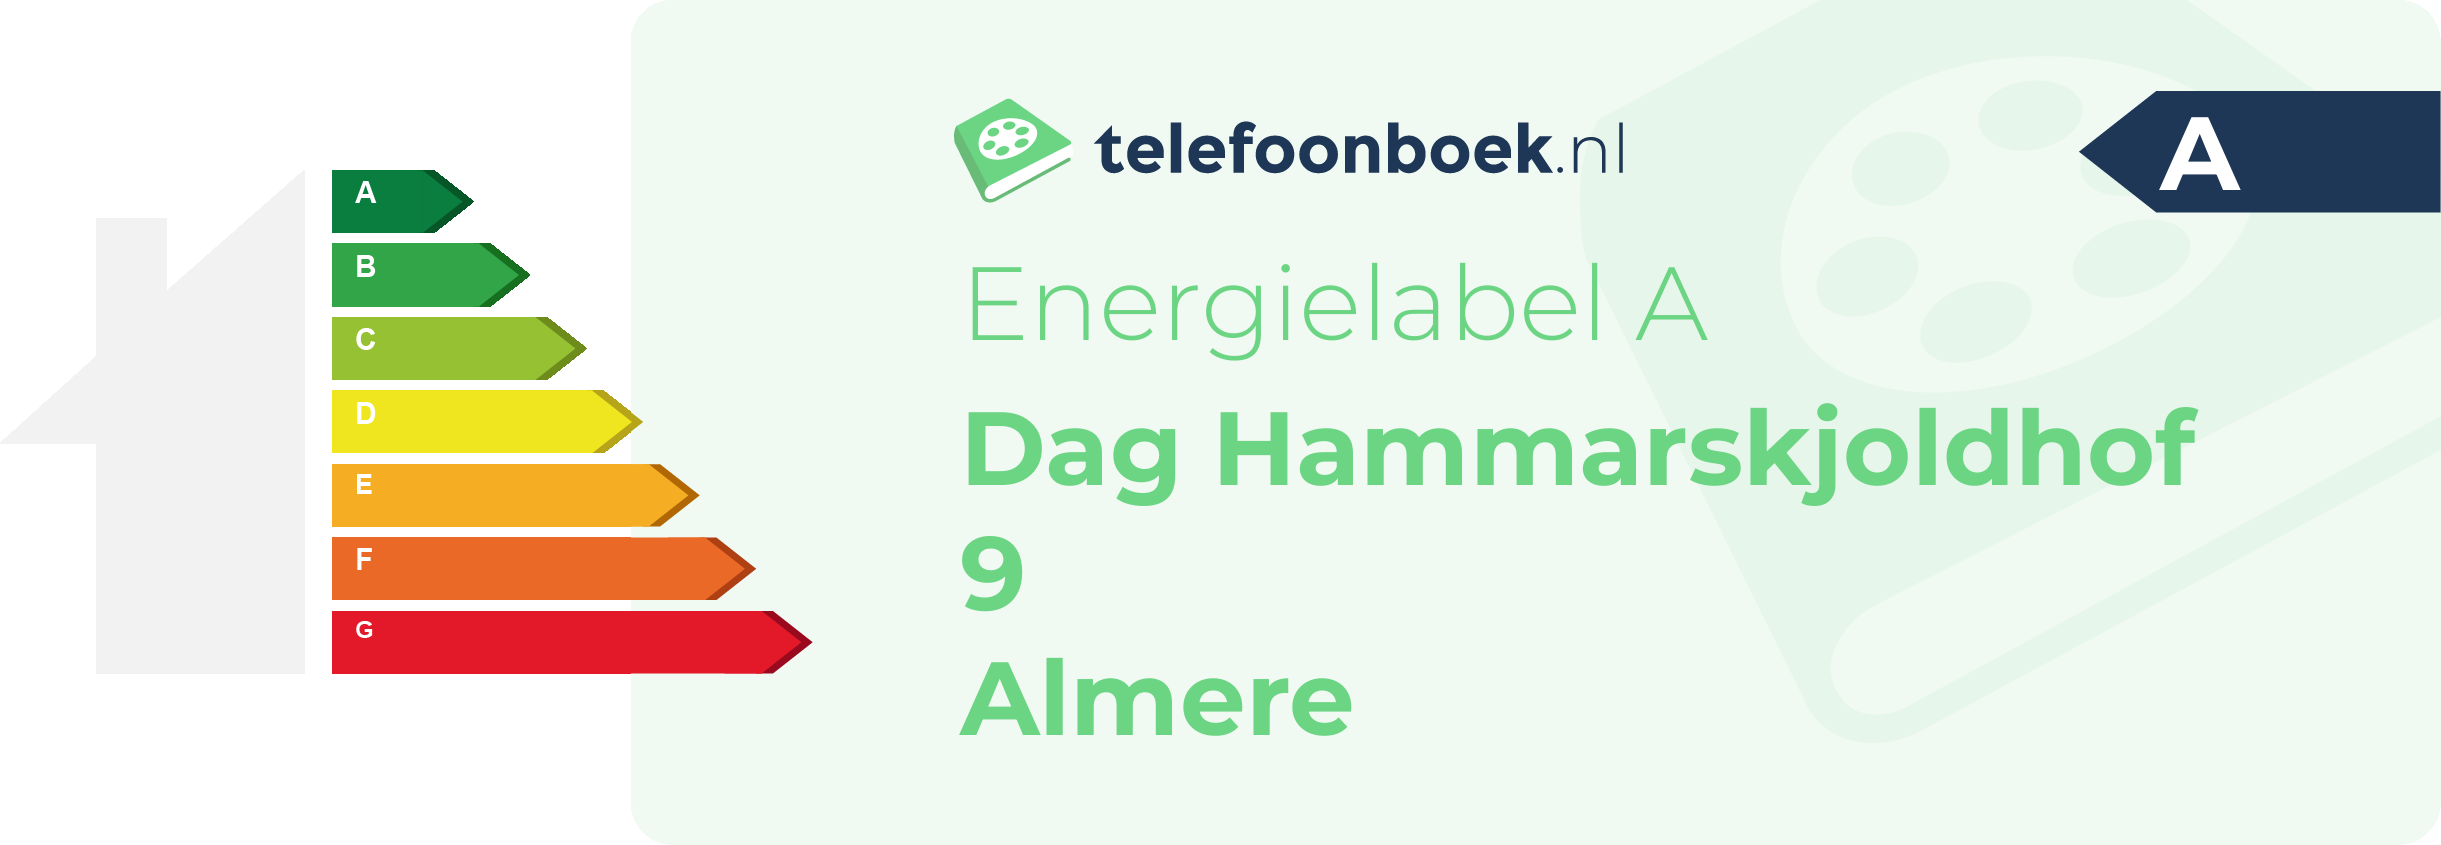 Energielabel Dag Hammarskjoldhof 9 Almere